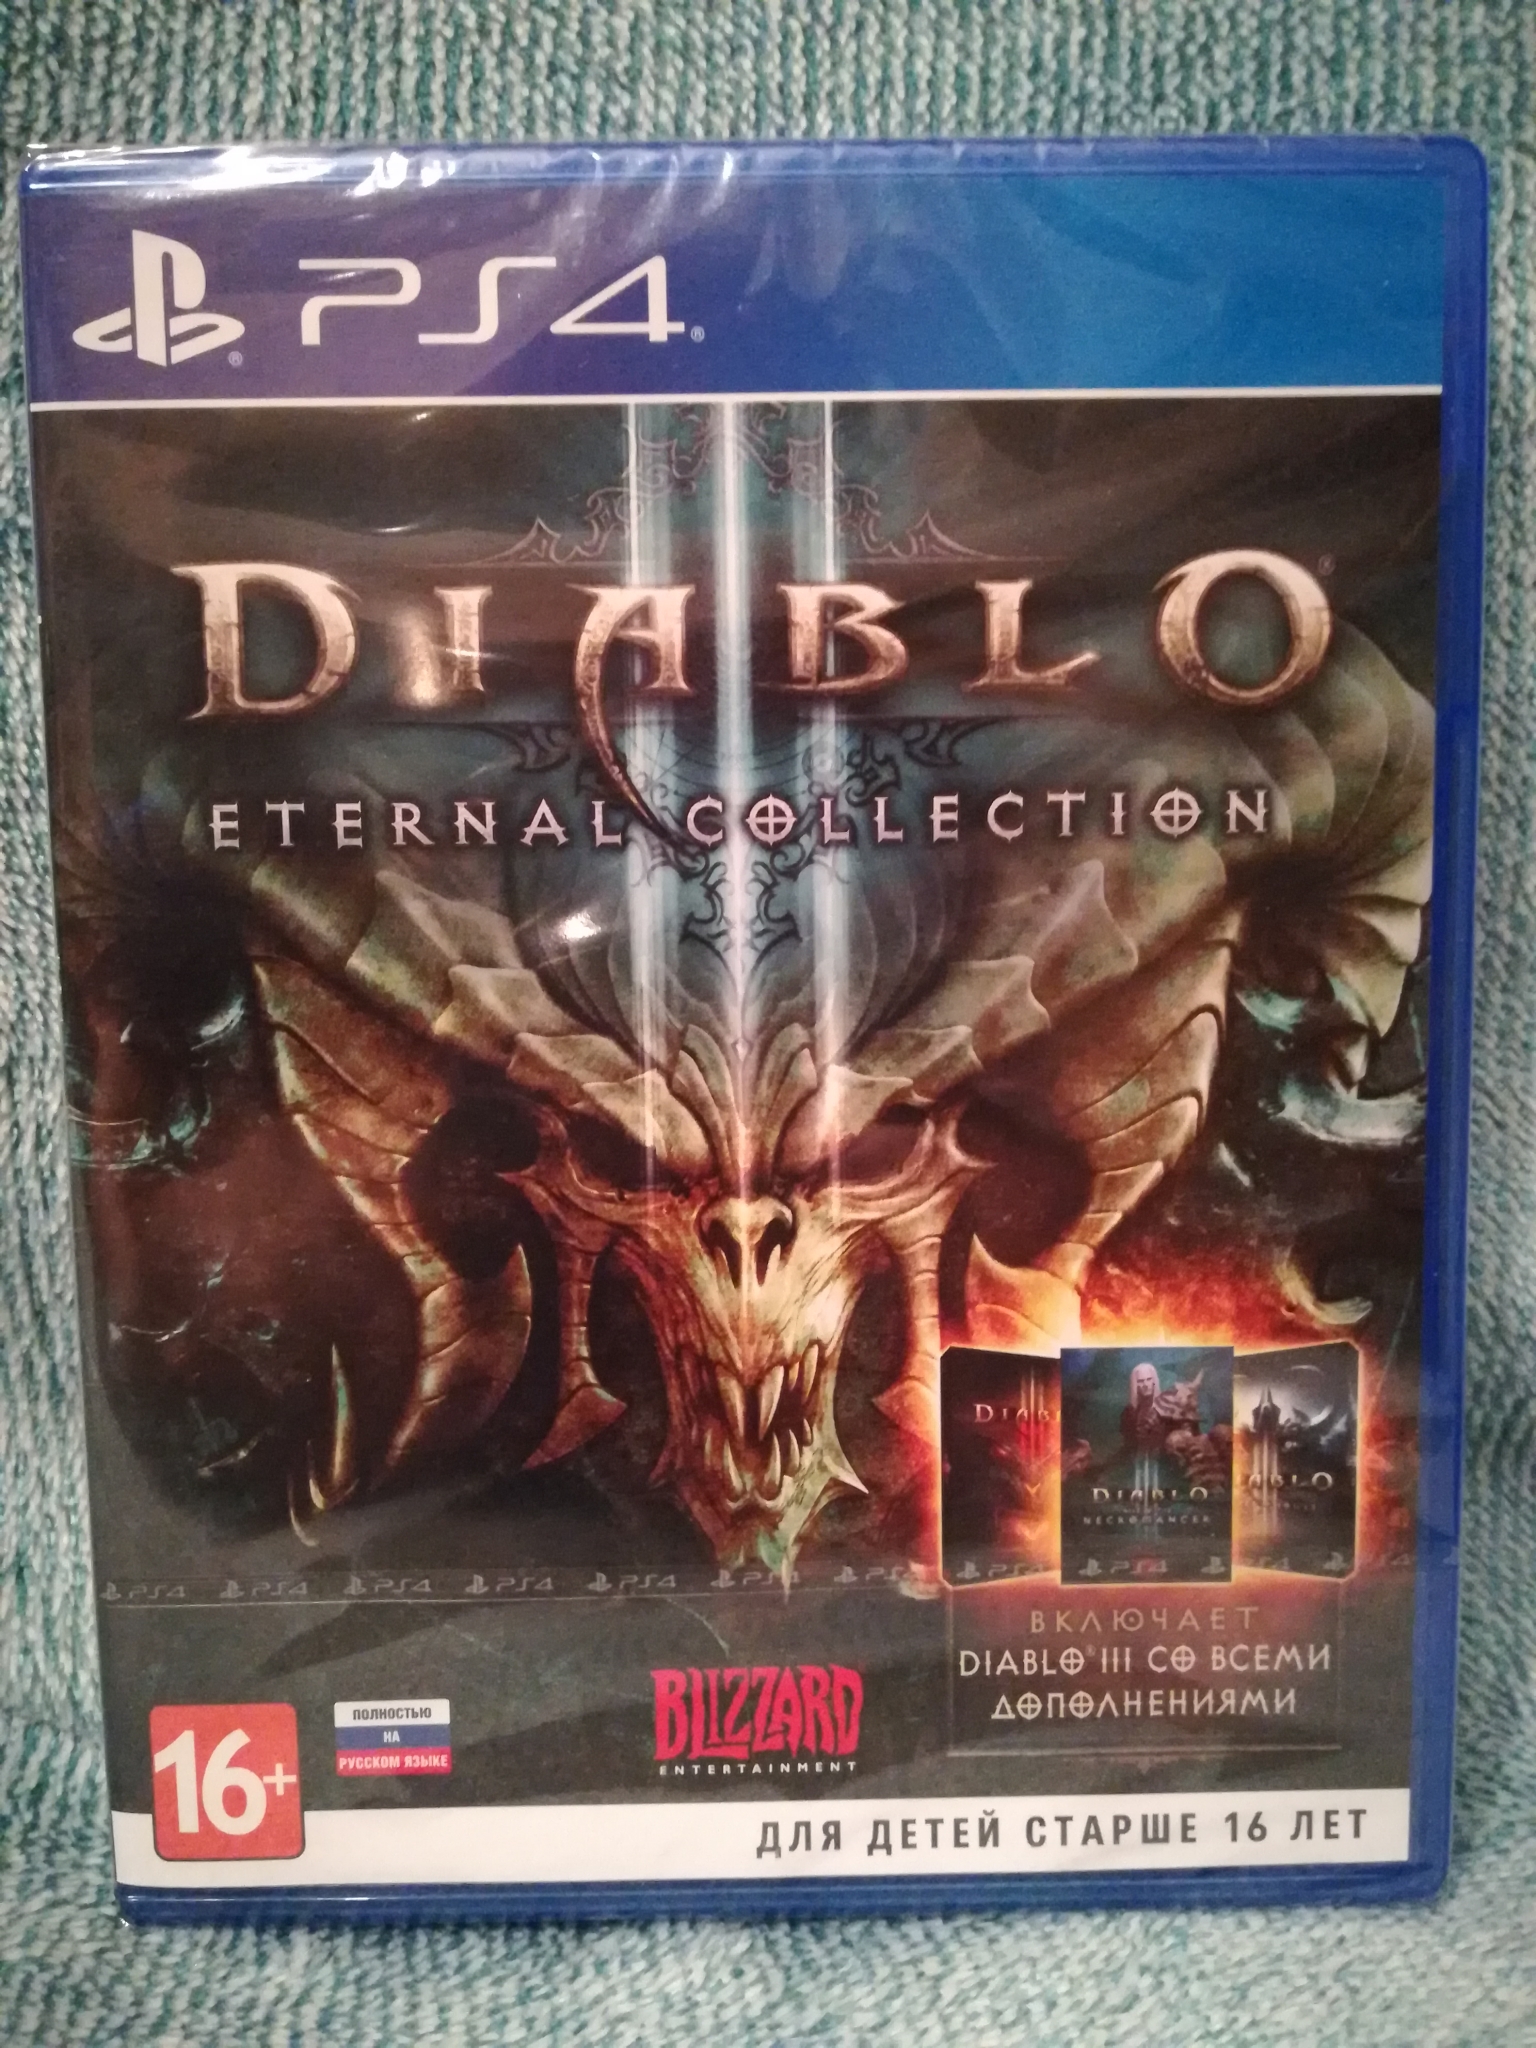 Диабло на пс 5. Diablo 3 Eternal collection ps4. Diablo III 3 ps3. Diablo 3 PS 4 диск. Diablo 3 Eternal collection ps4 Disk.